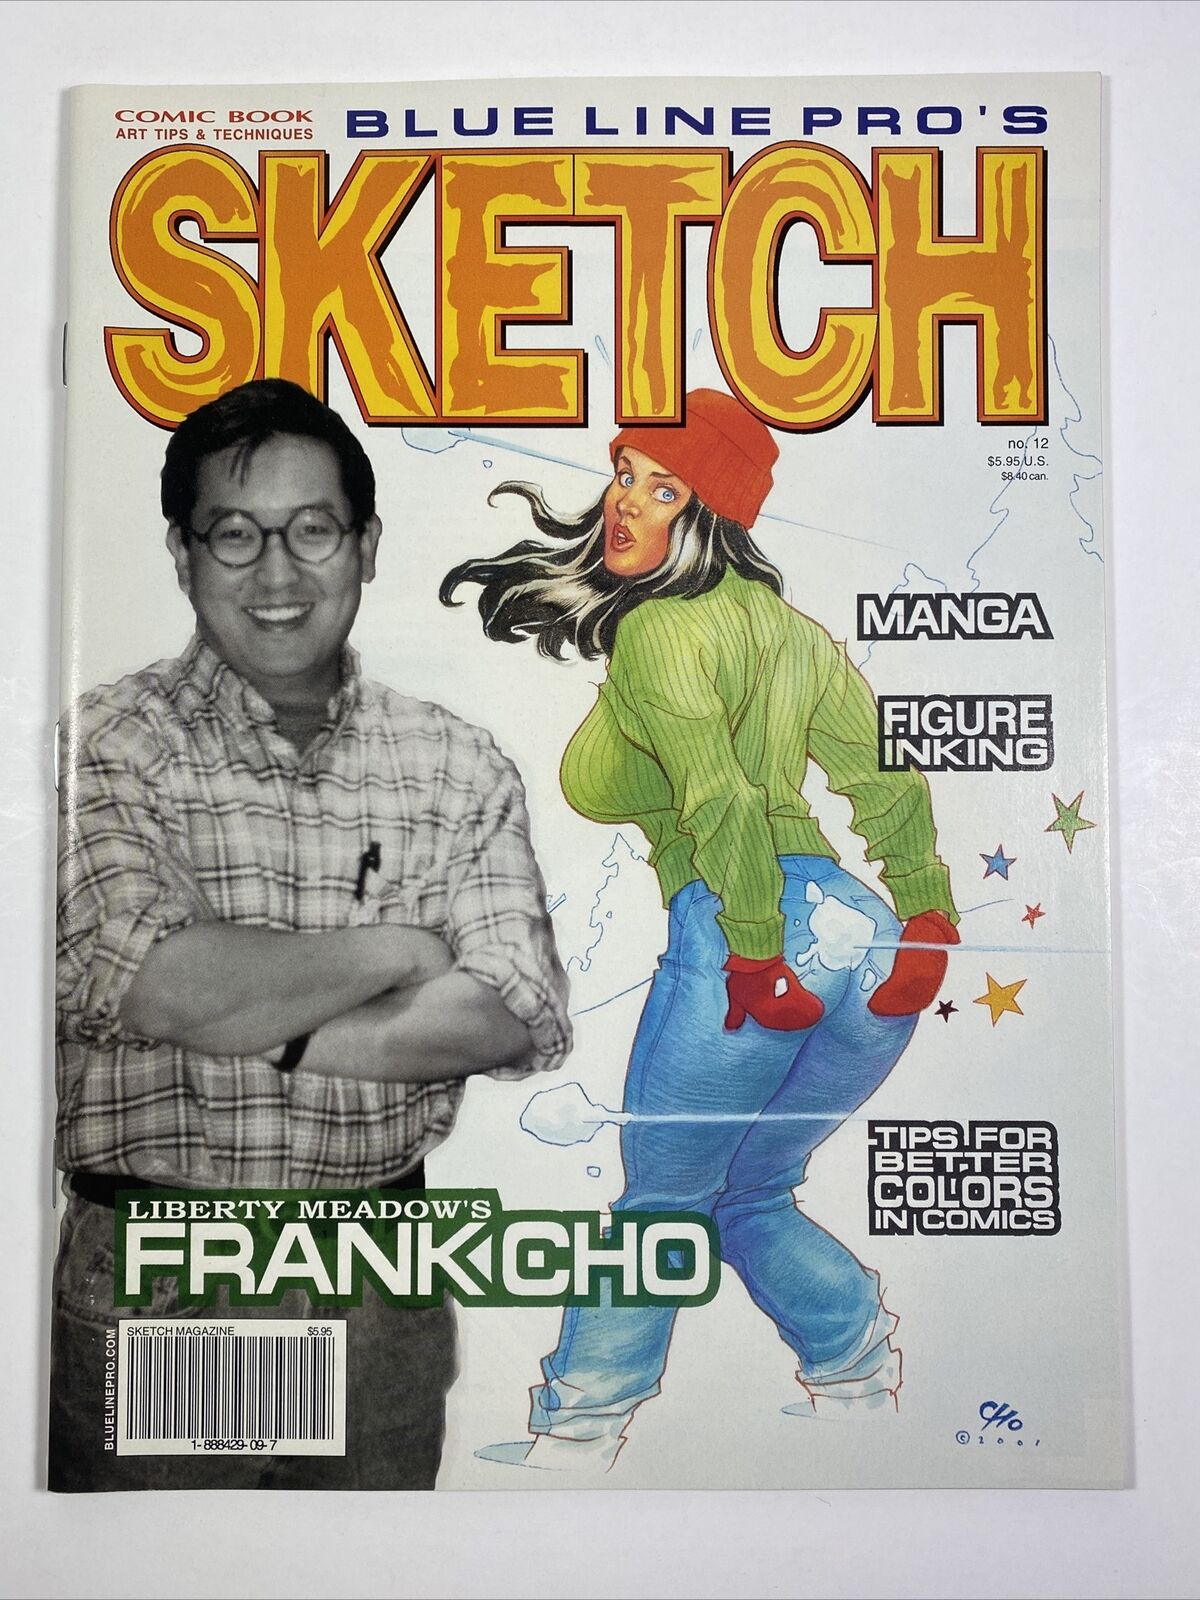 Sketch magazine #12- Comic book art & techniques- Frank Cho liberty Meadows 2001